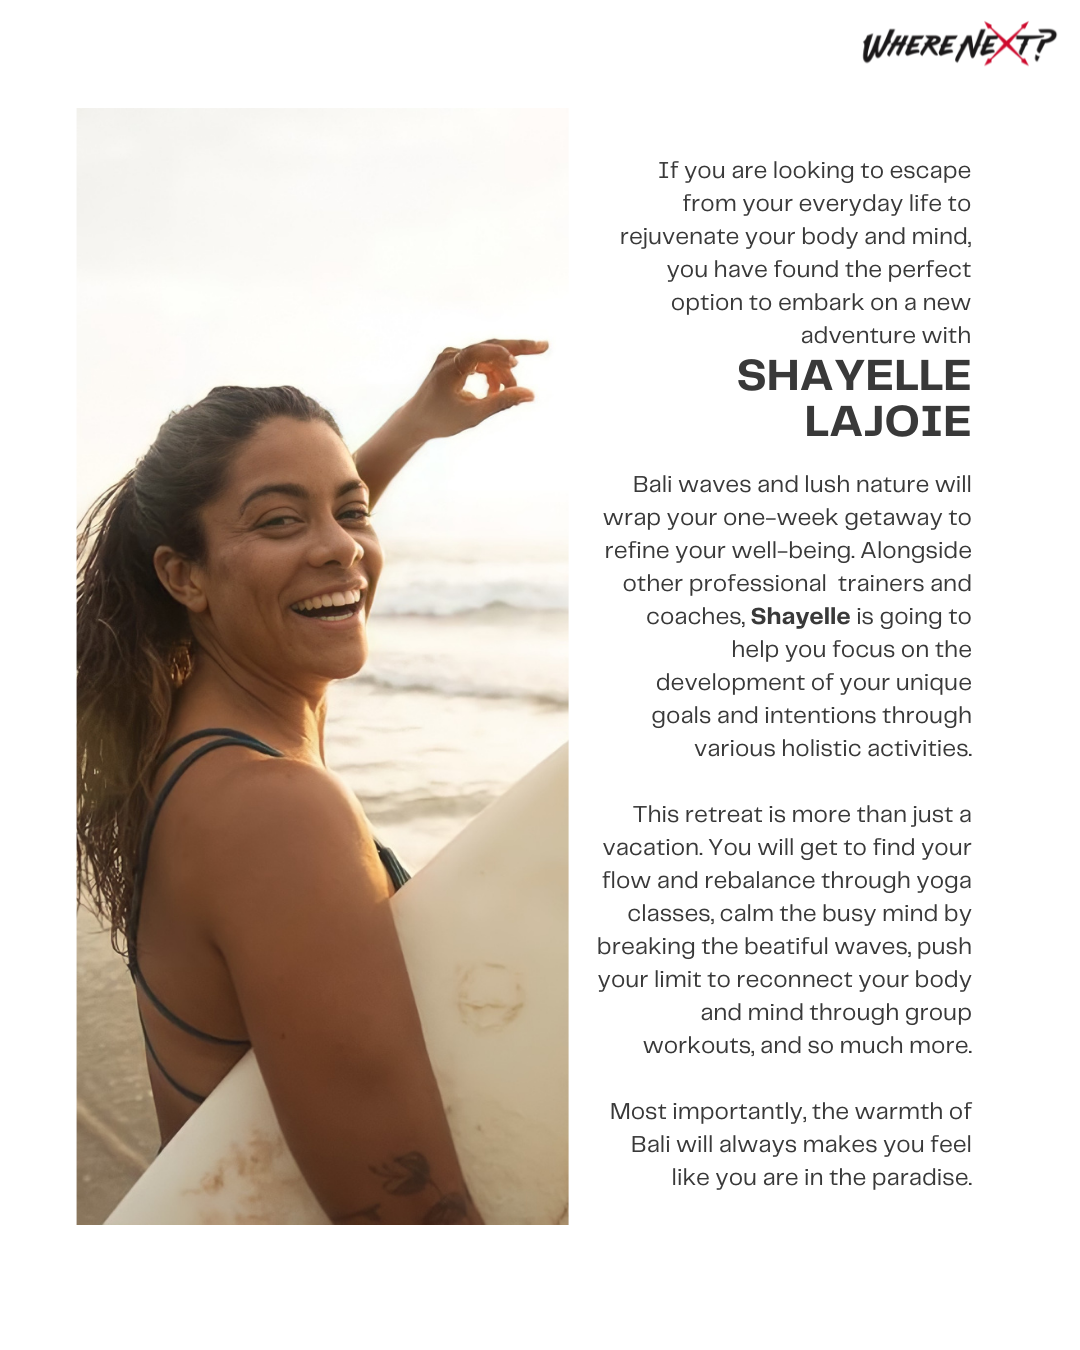 Shayelle's Mindful Movement & Surf Retreat